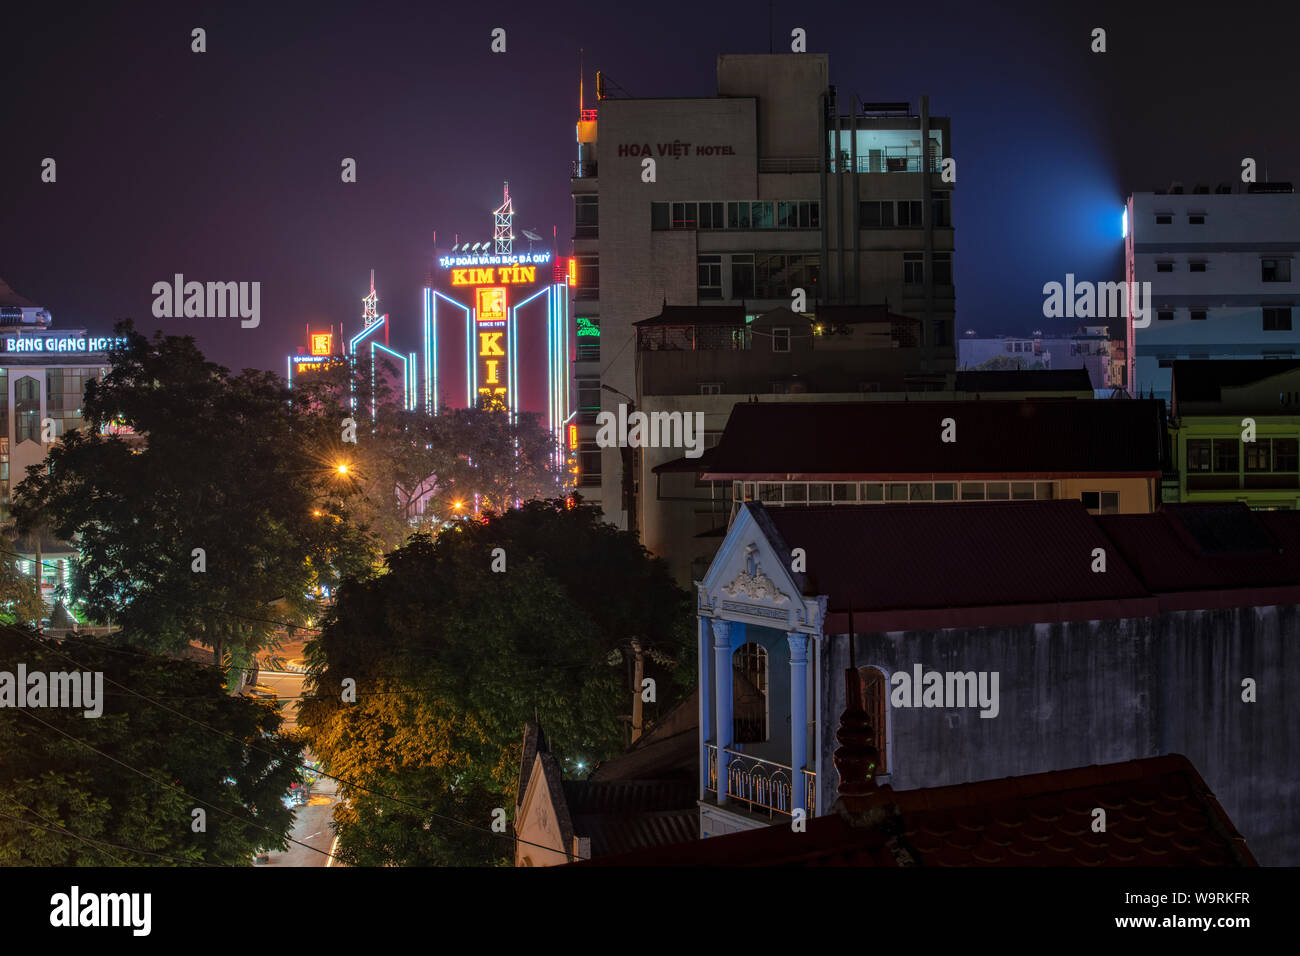 Asien, Asien, Südostasien, Vietnam, Nord, Cao Bang *** Local Caption *** Stockfoto